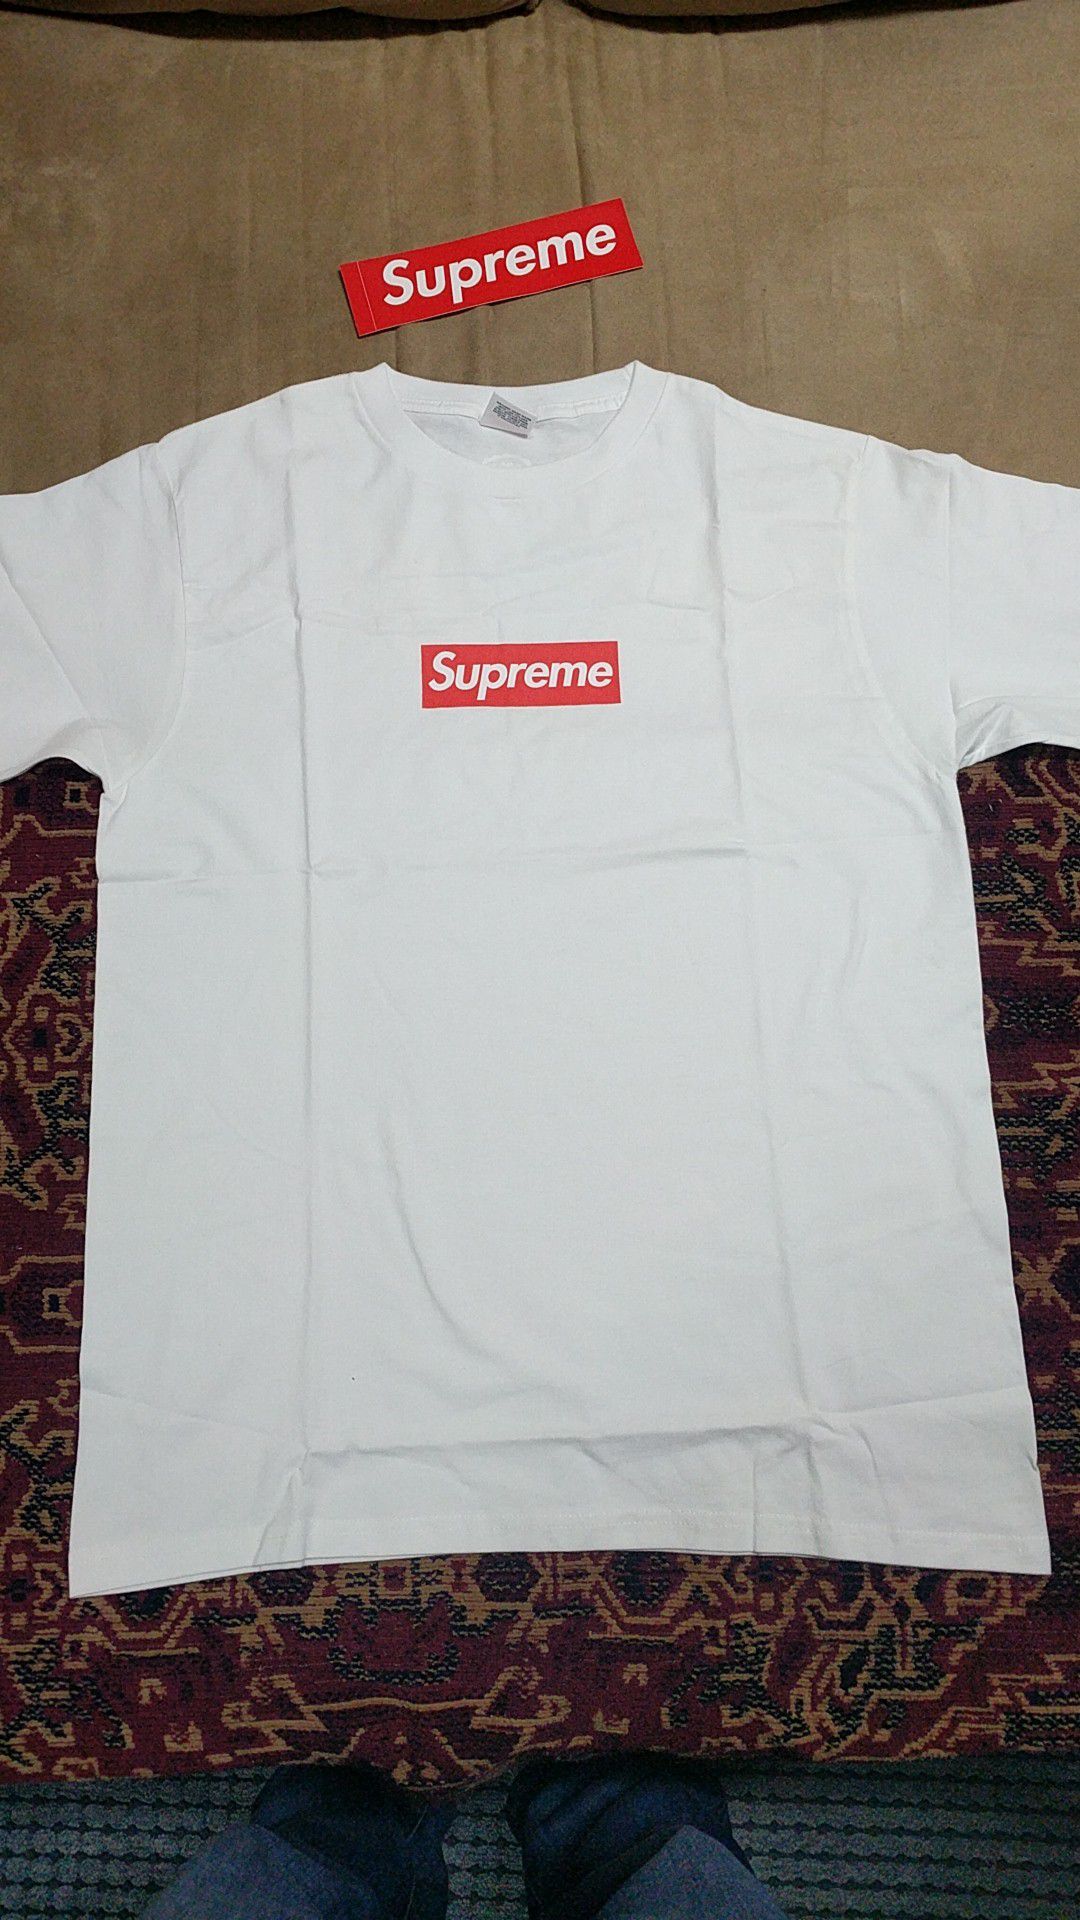 Supreme SS14 20th Anniv. Tee Shirt sz L